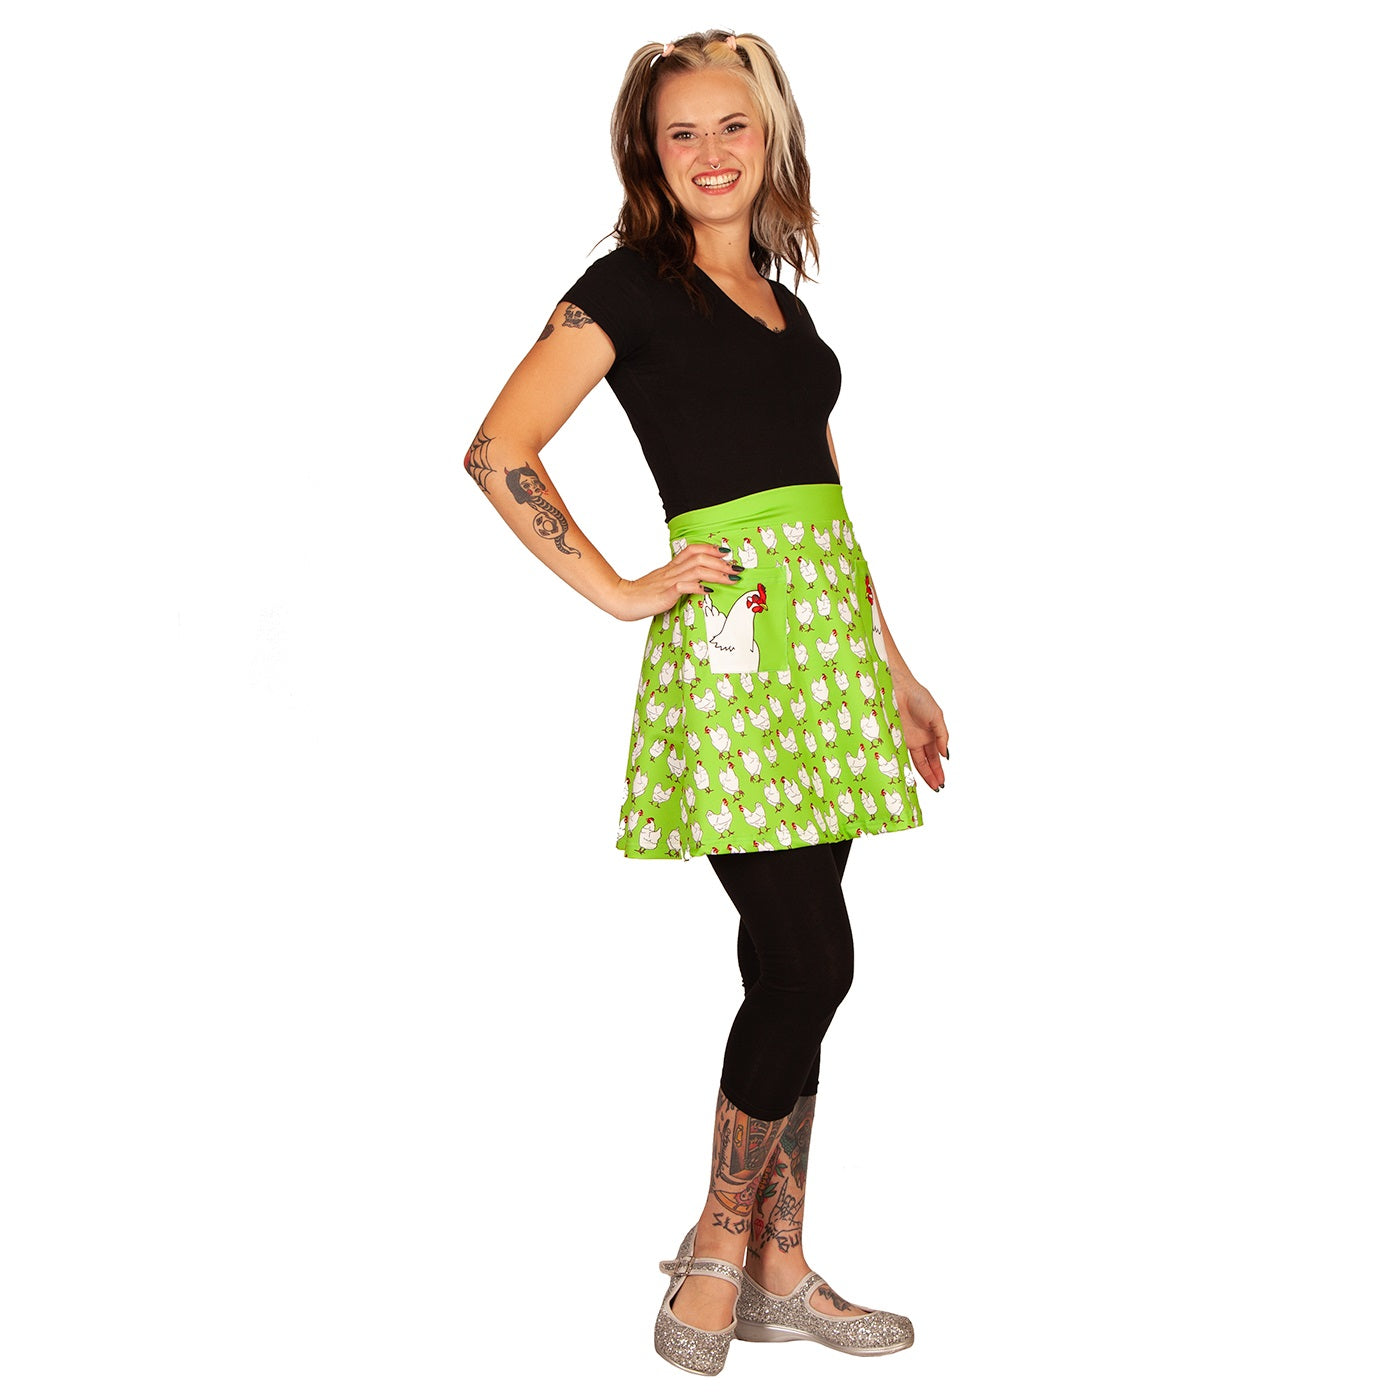 Flock Short Skirt by RainbowsAndFairies.com (Chickens - Chooks - Bright Green - Skirt With Pockets - Aline Skirt - Cute Flirty - Vintage Inspired) - SKU: CL_SHORT_FLOCK_ORG - Pic 06